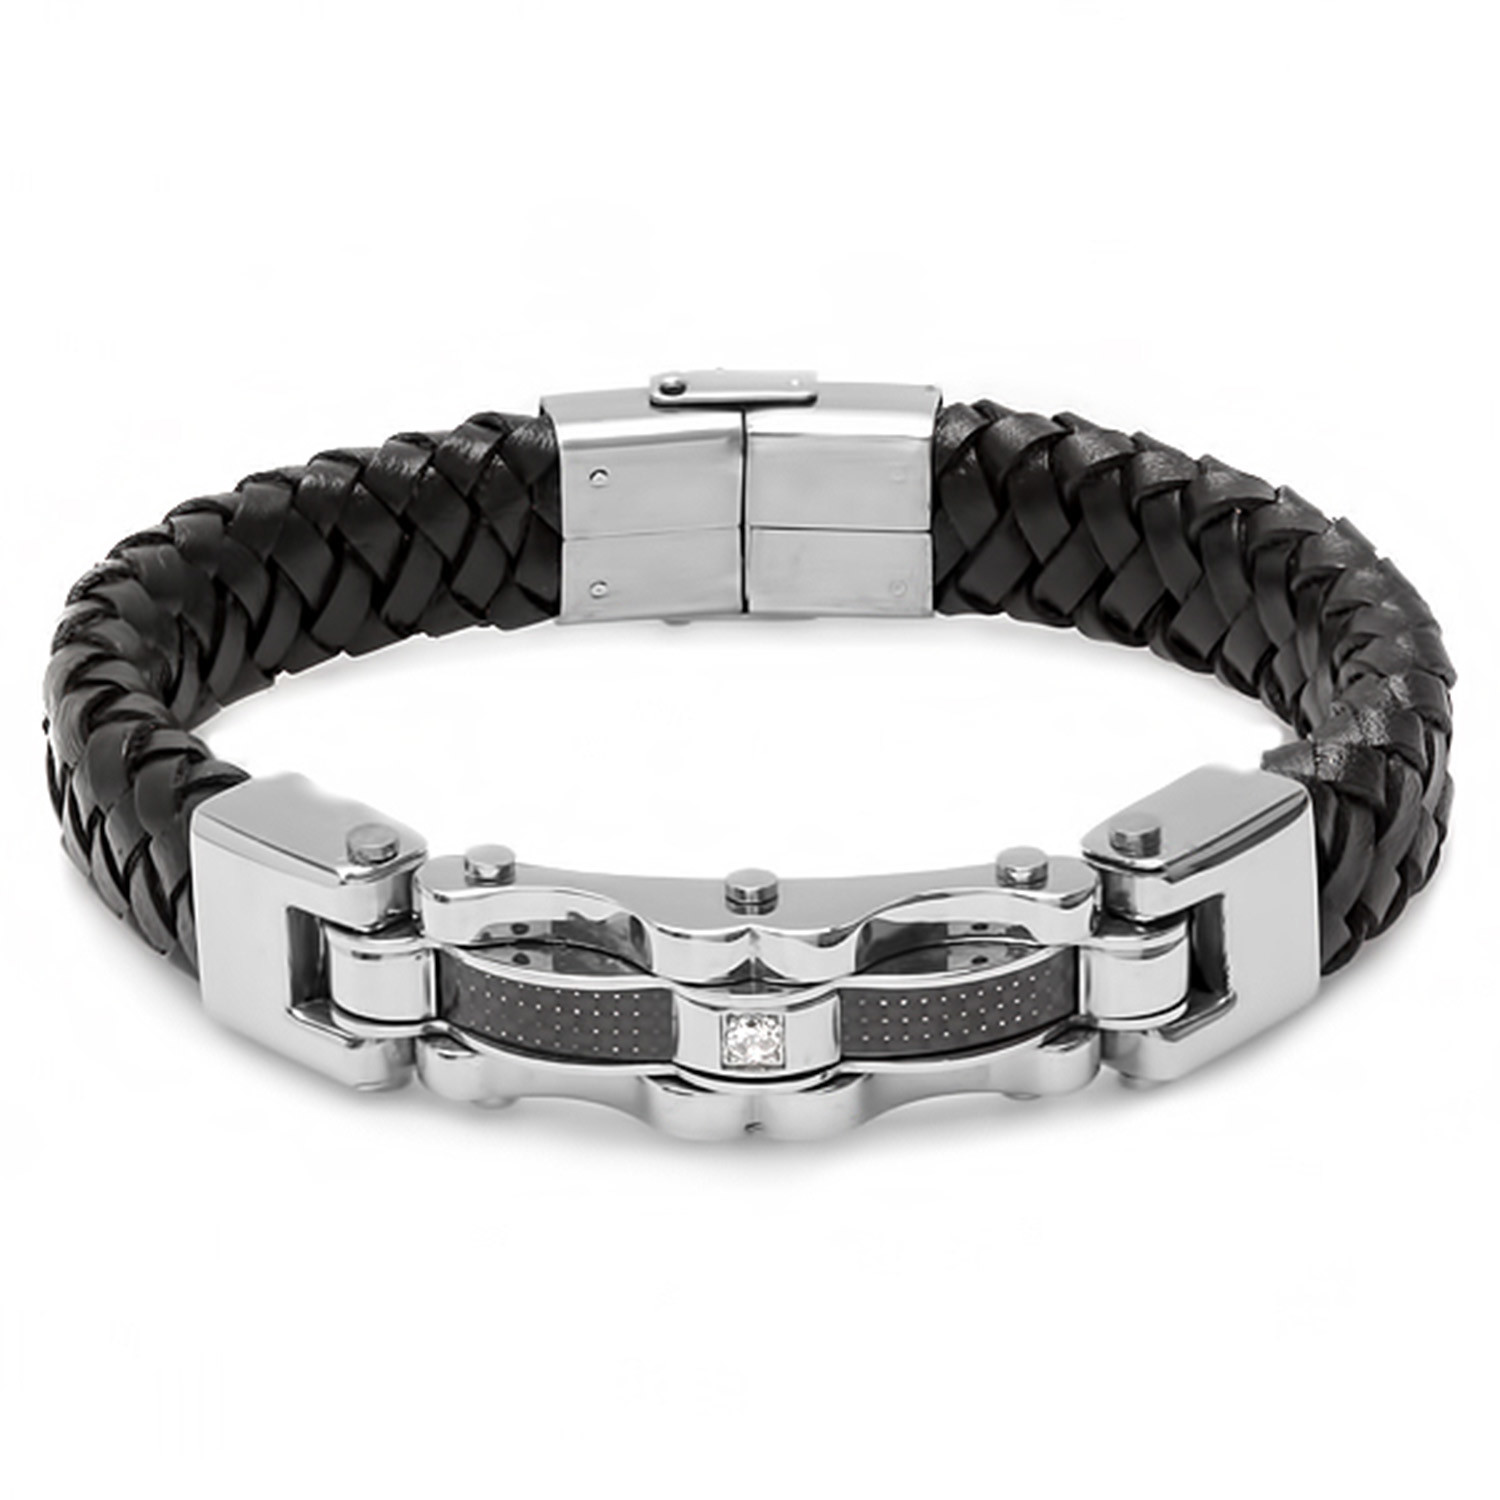 Carbon Fiber Braided Leather Bracelet // Silver + Black - HMY Jewelry ...